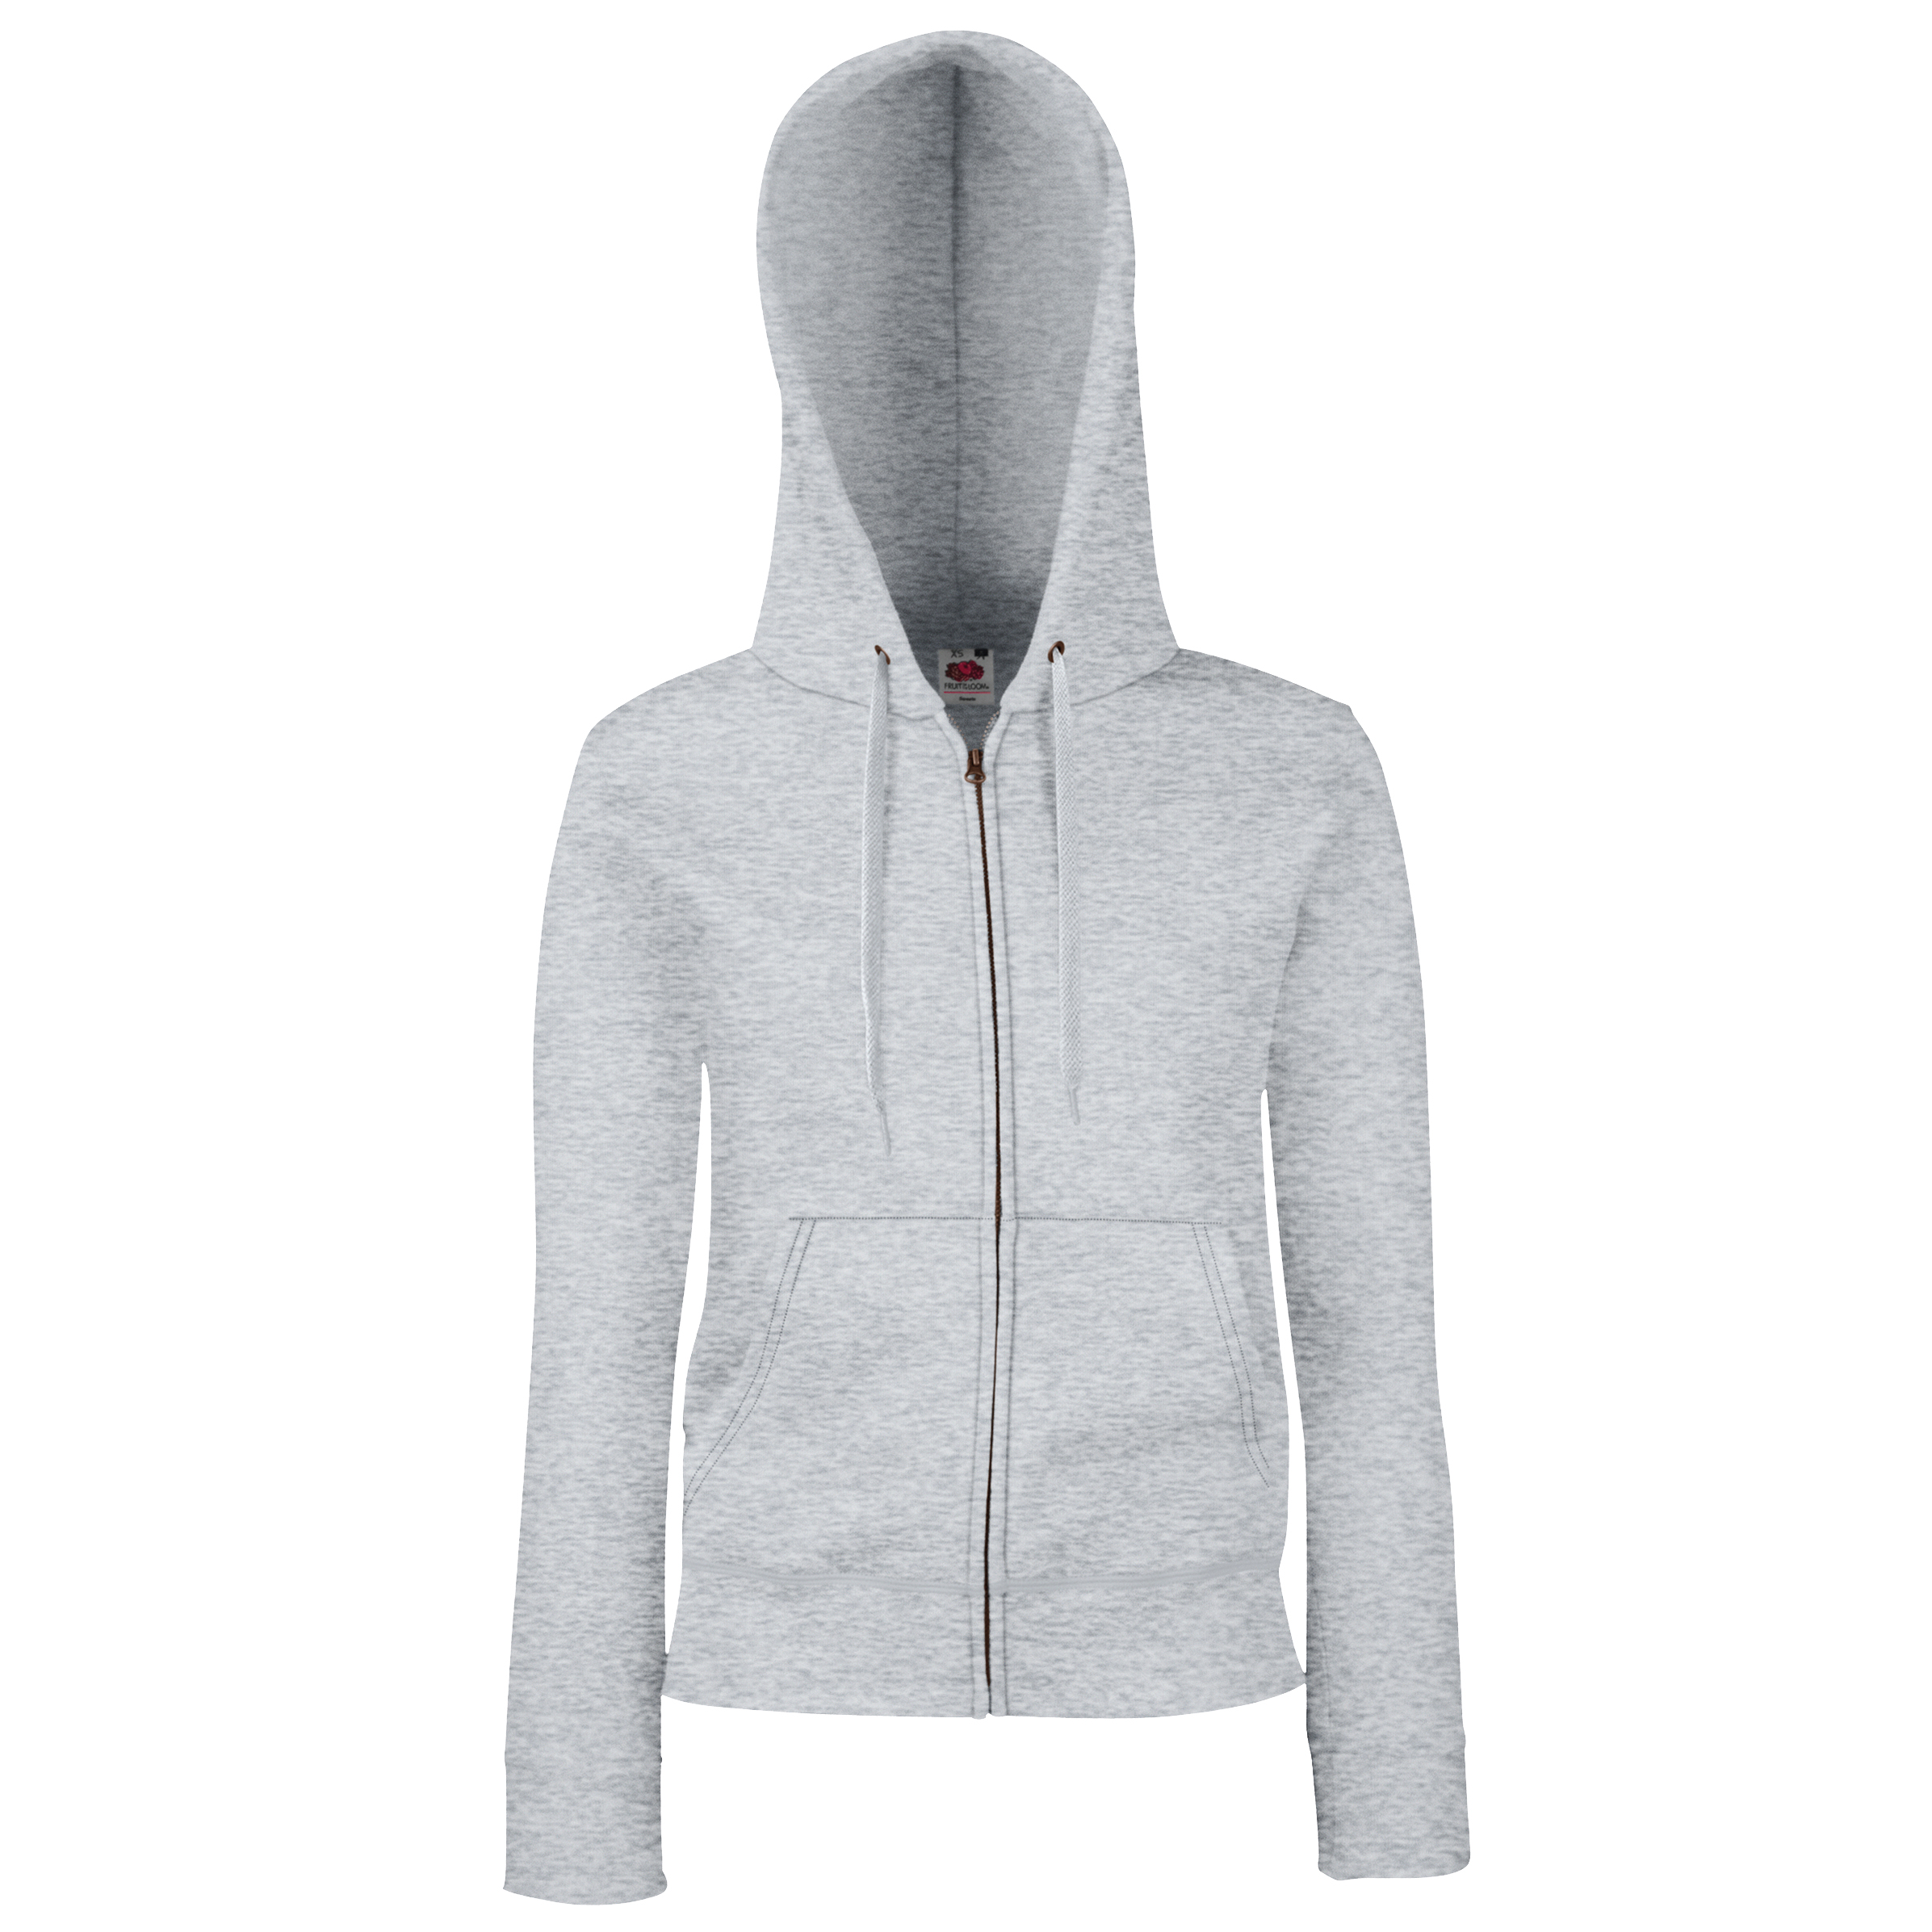 ax-httpswebsystems.s3.amazonaws.comtmp_for_downloadfruit-of-the-loom-womens-premium-70-30-hooded-sweatshirt-jacket-heather-grey.jpeg